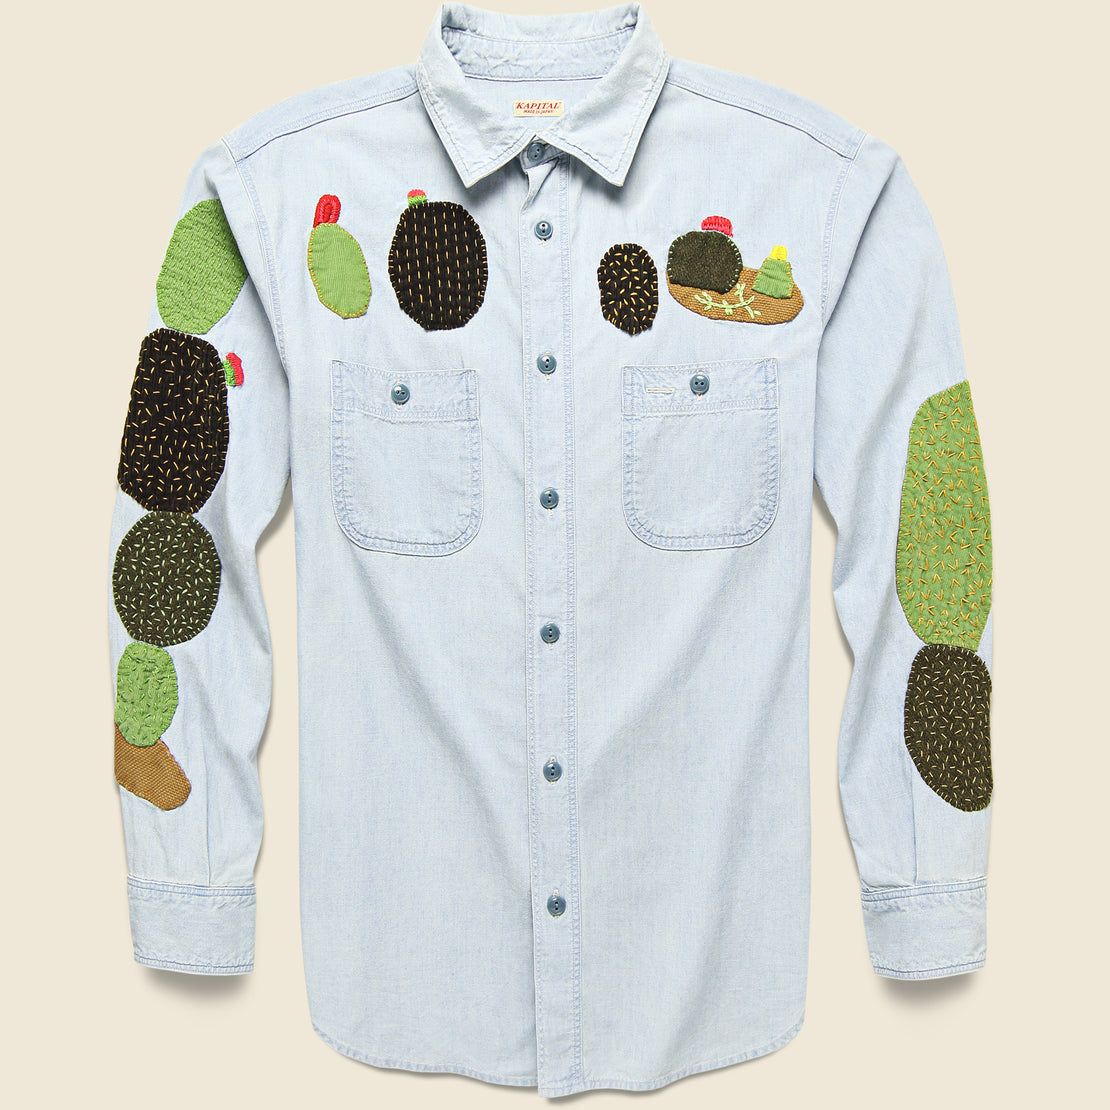 Kapital Chambray Work Shirt with Cactus Embroidery - Indigo